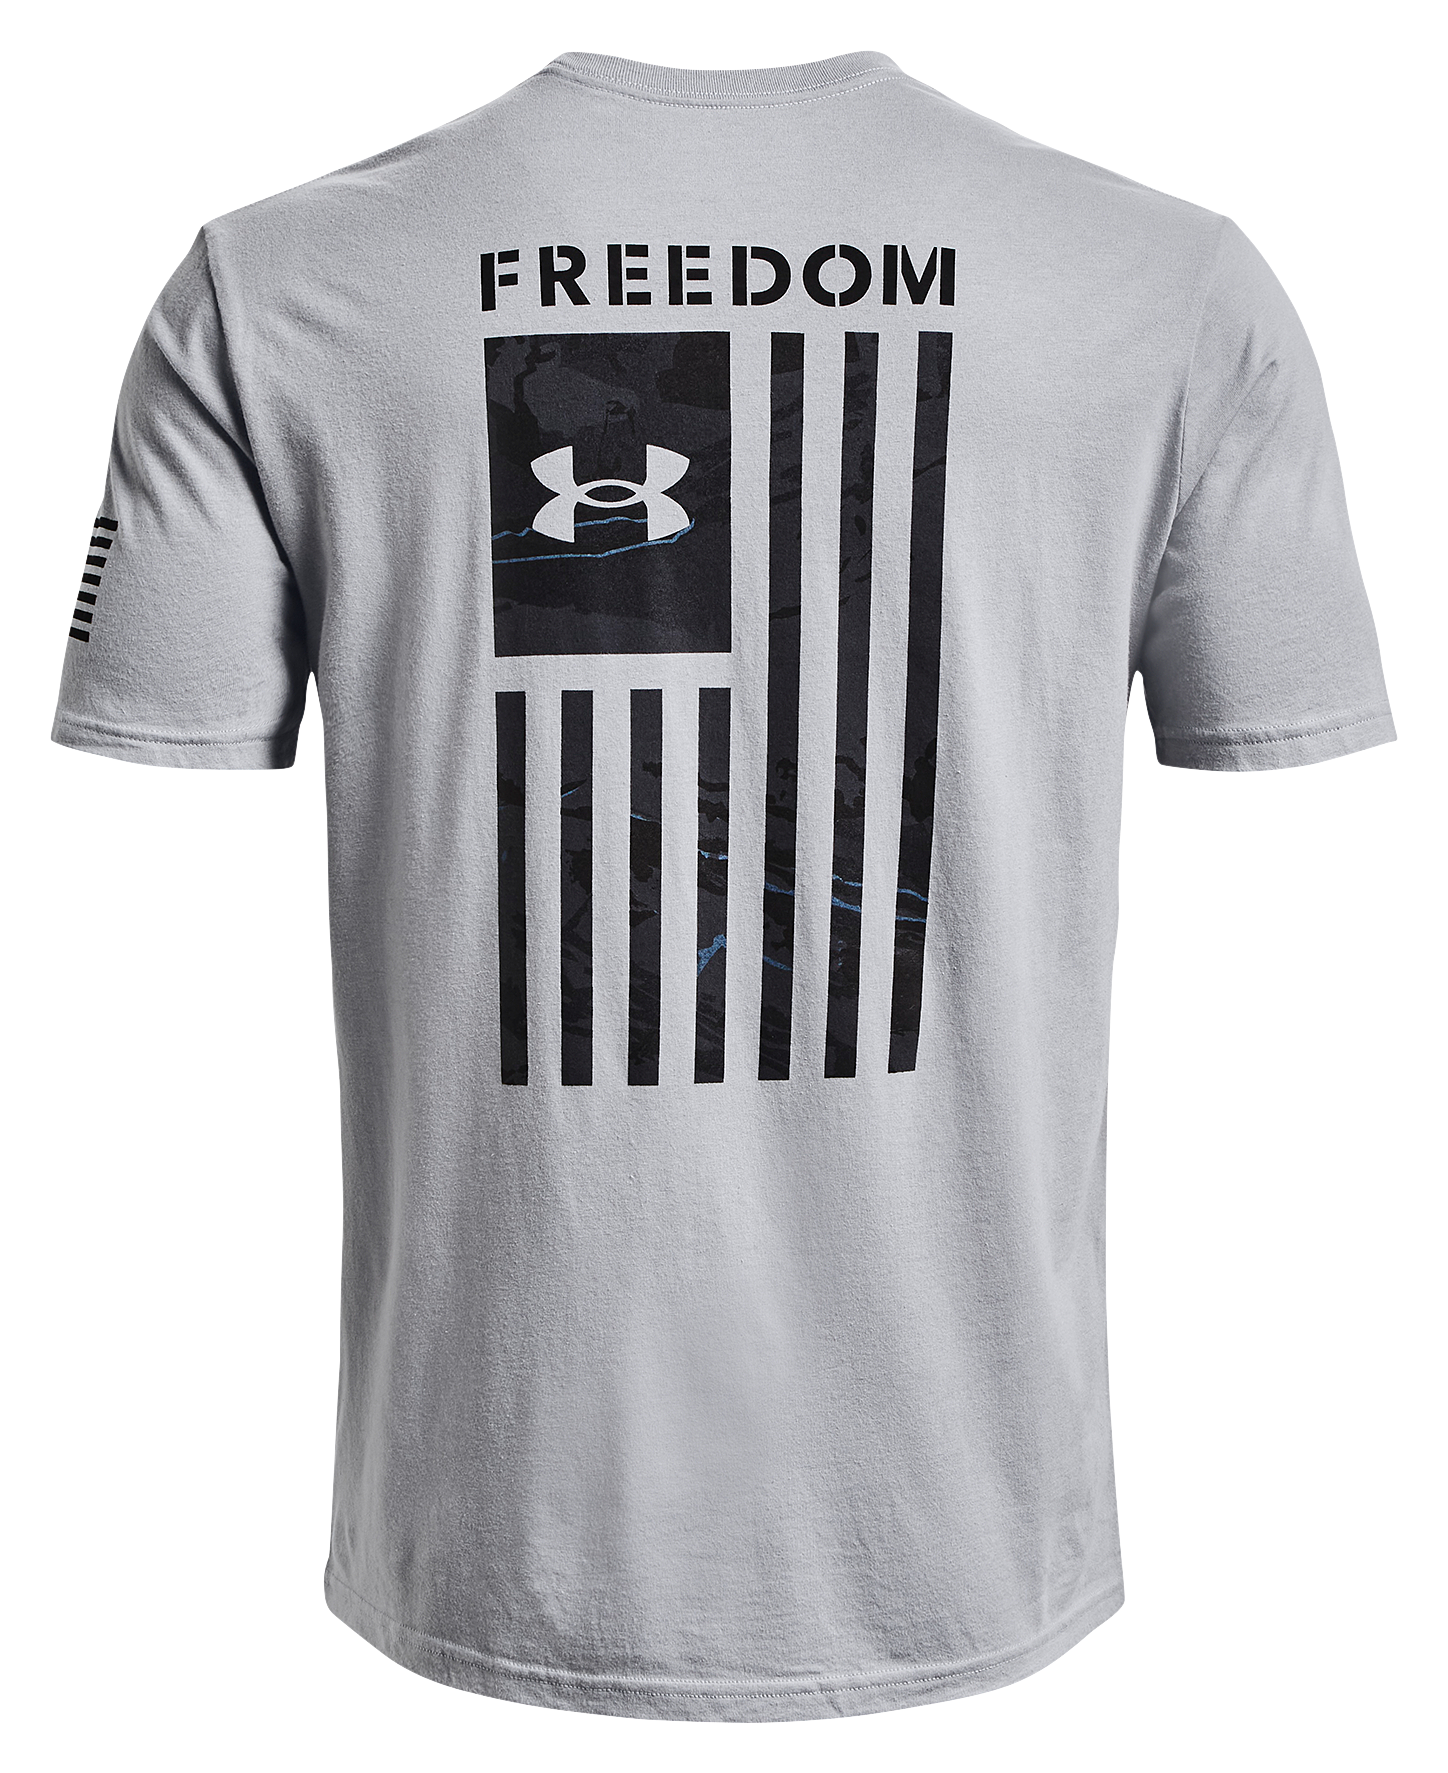 Under Armour Freedom Flag Short-Sleeve T-Shirt for Men - Steel/UA Blackout Camo - 2XL